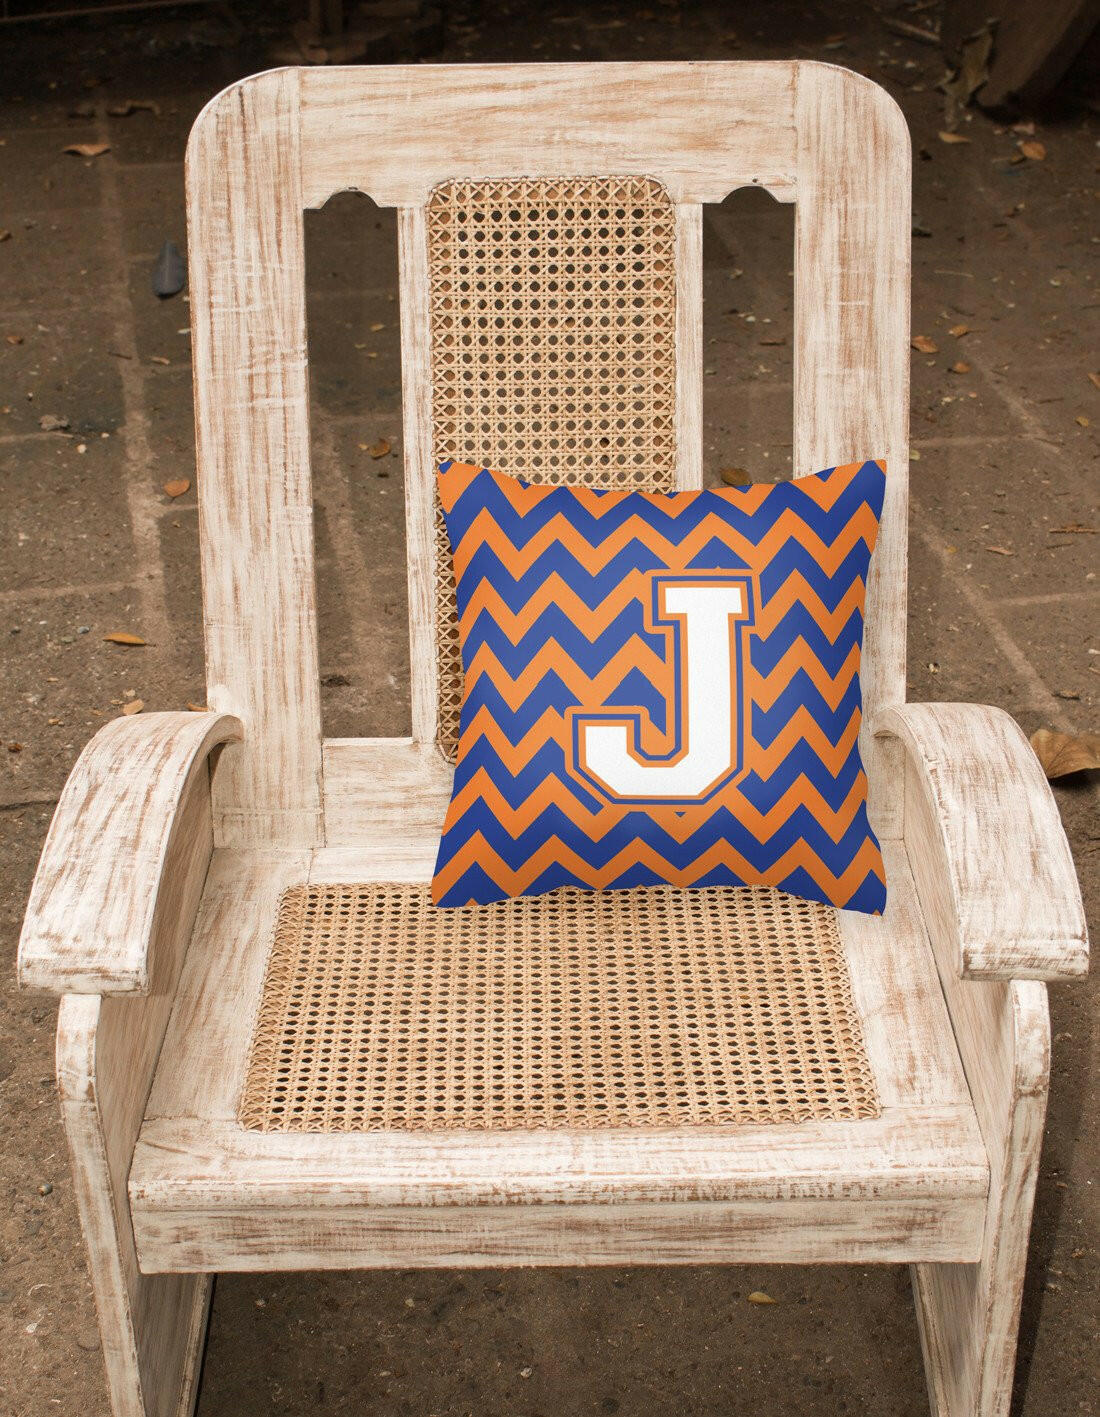 Letter J Chevron Blue and Orange #3 Fabric Decorative Pillow CJ1060-JPW1414 by Caroline's Treasures